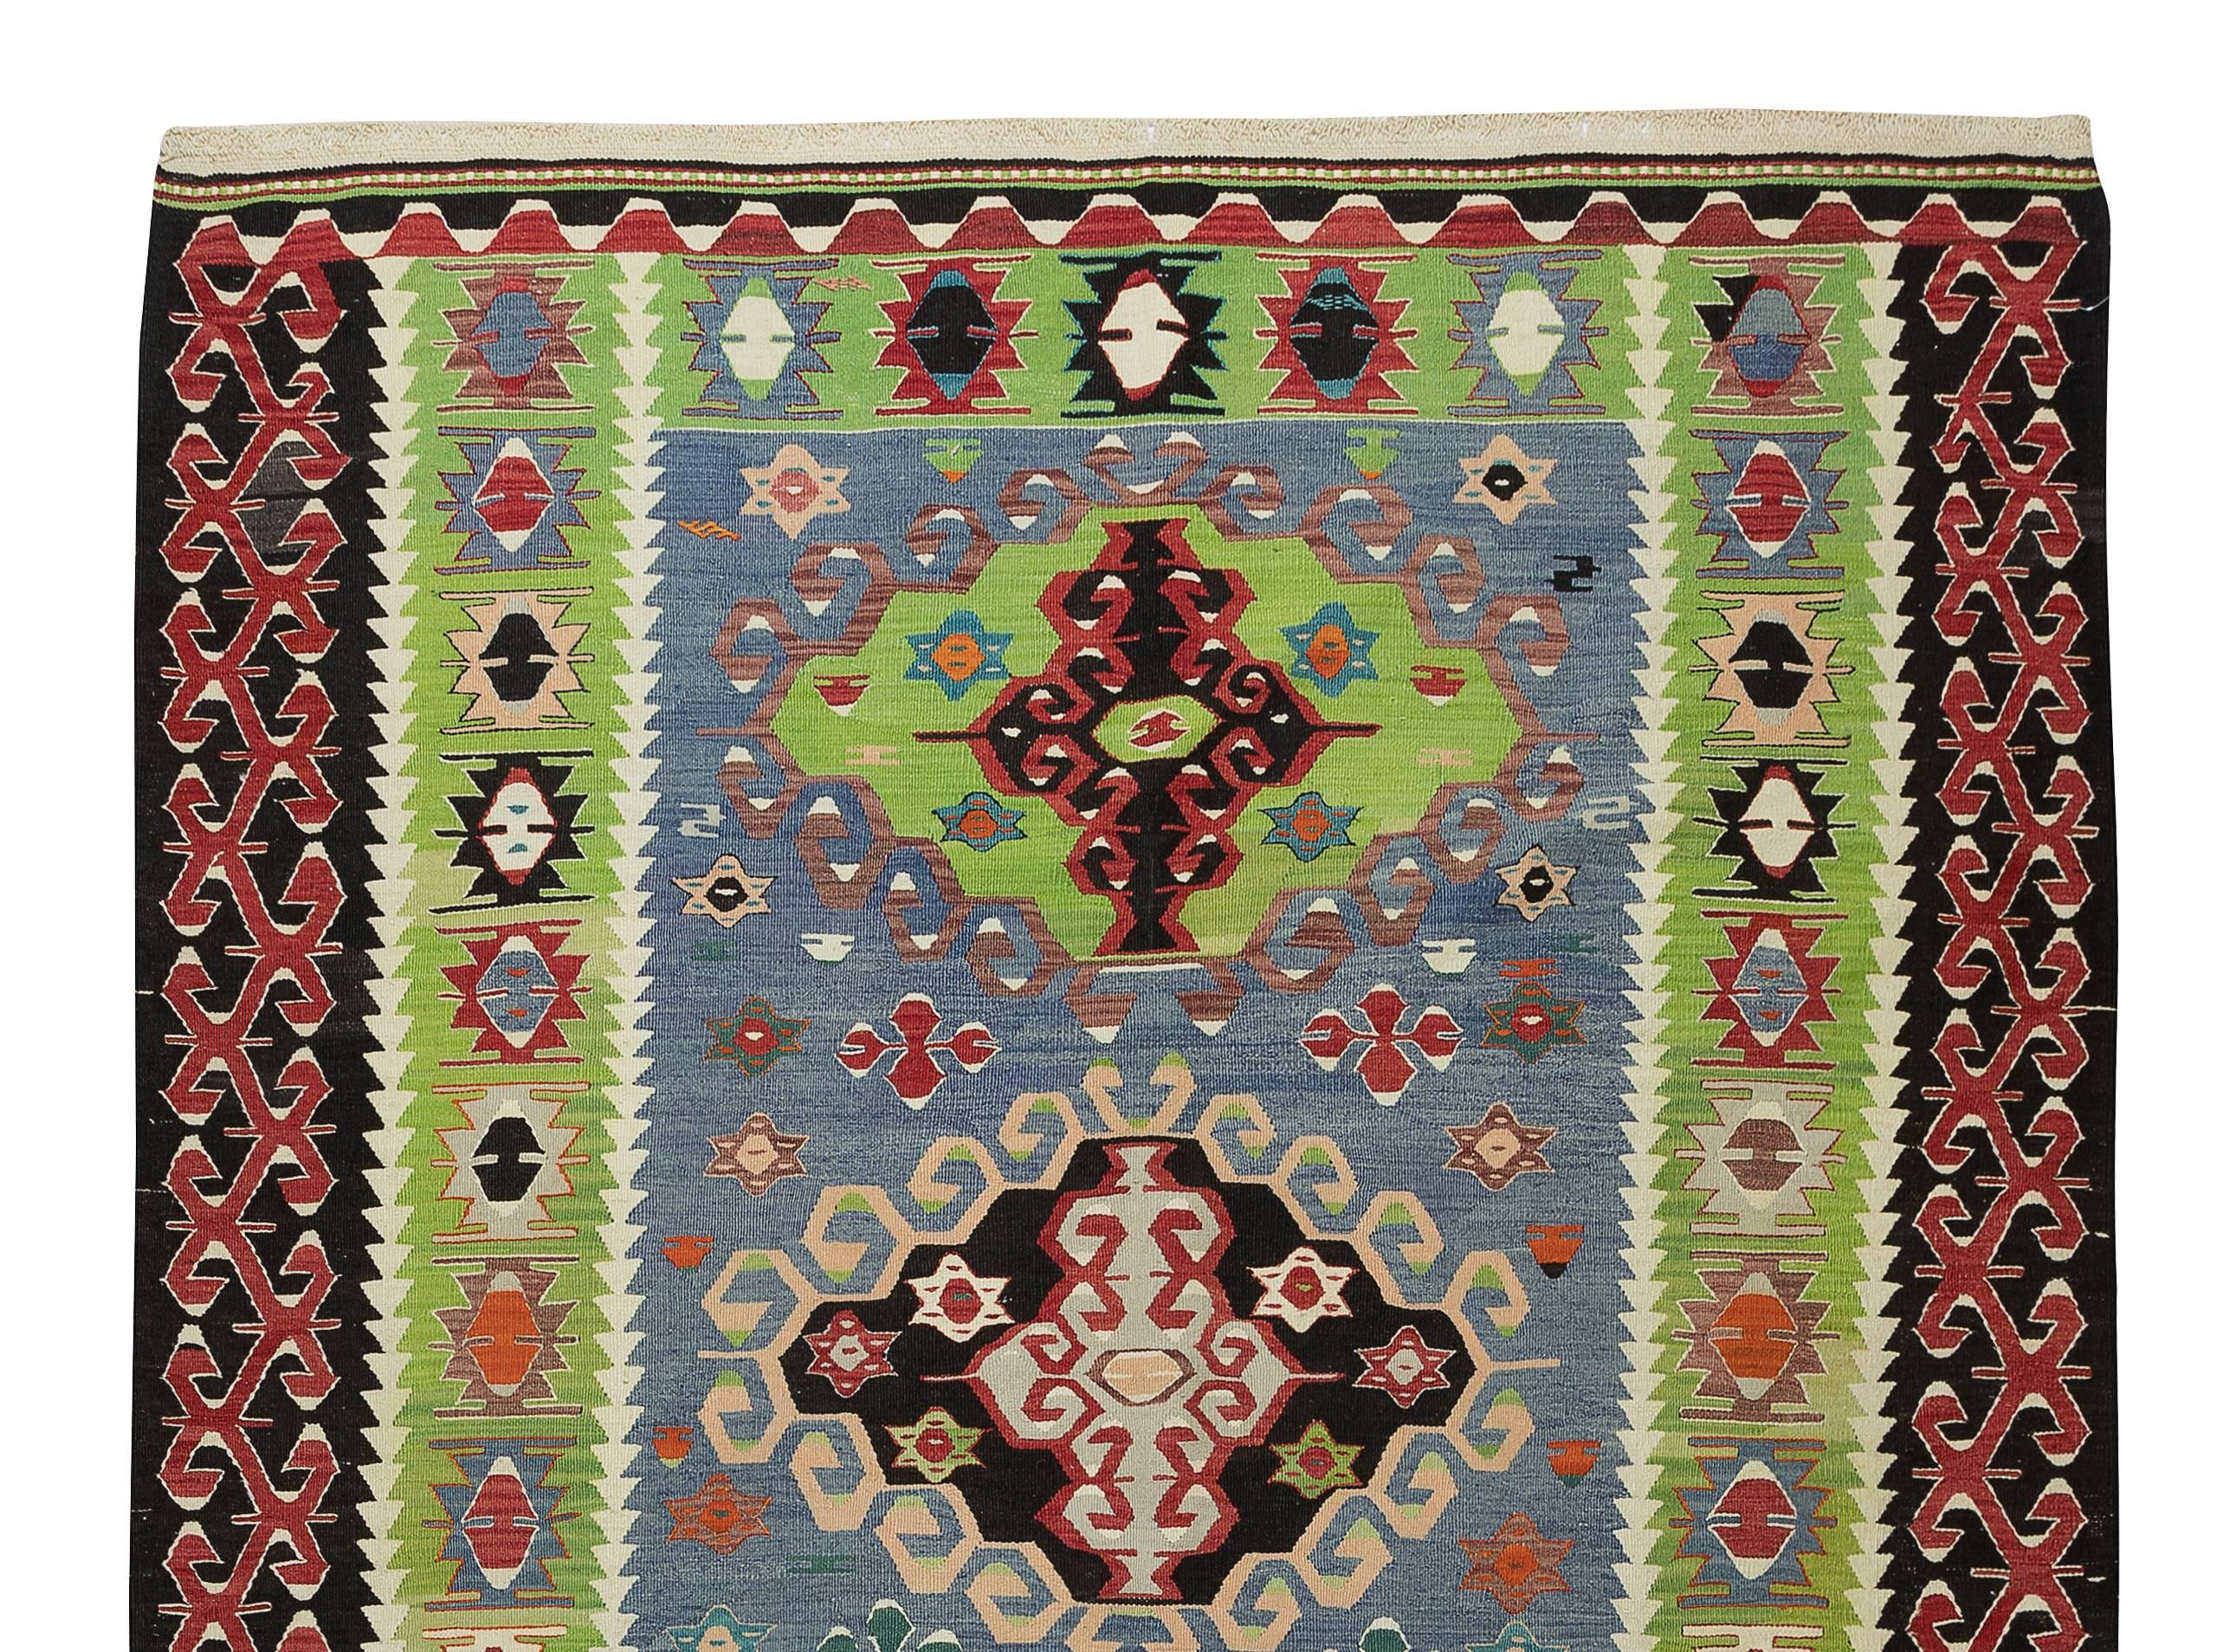 6x8.8 Ft Colorful Vintage Handmade Turkish Kilim Rug, Flat-Weave Floor Covering (Türkisch) im Angebot